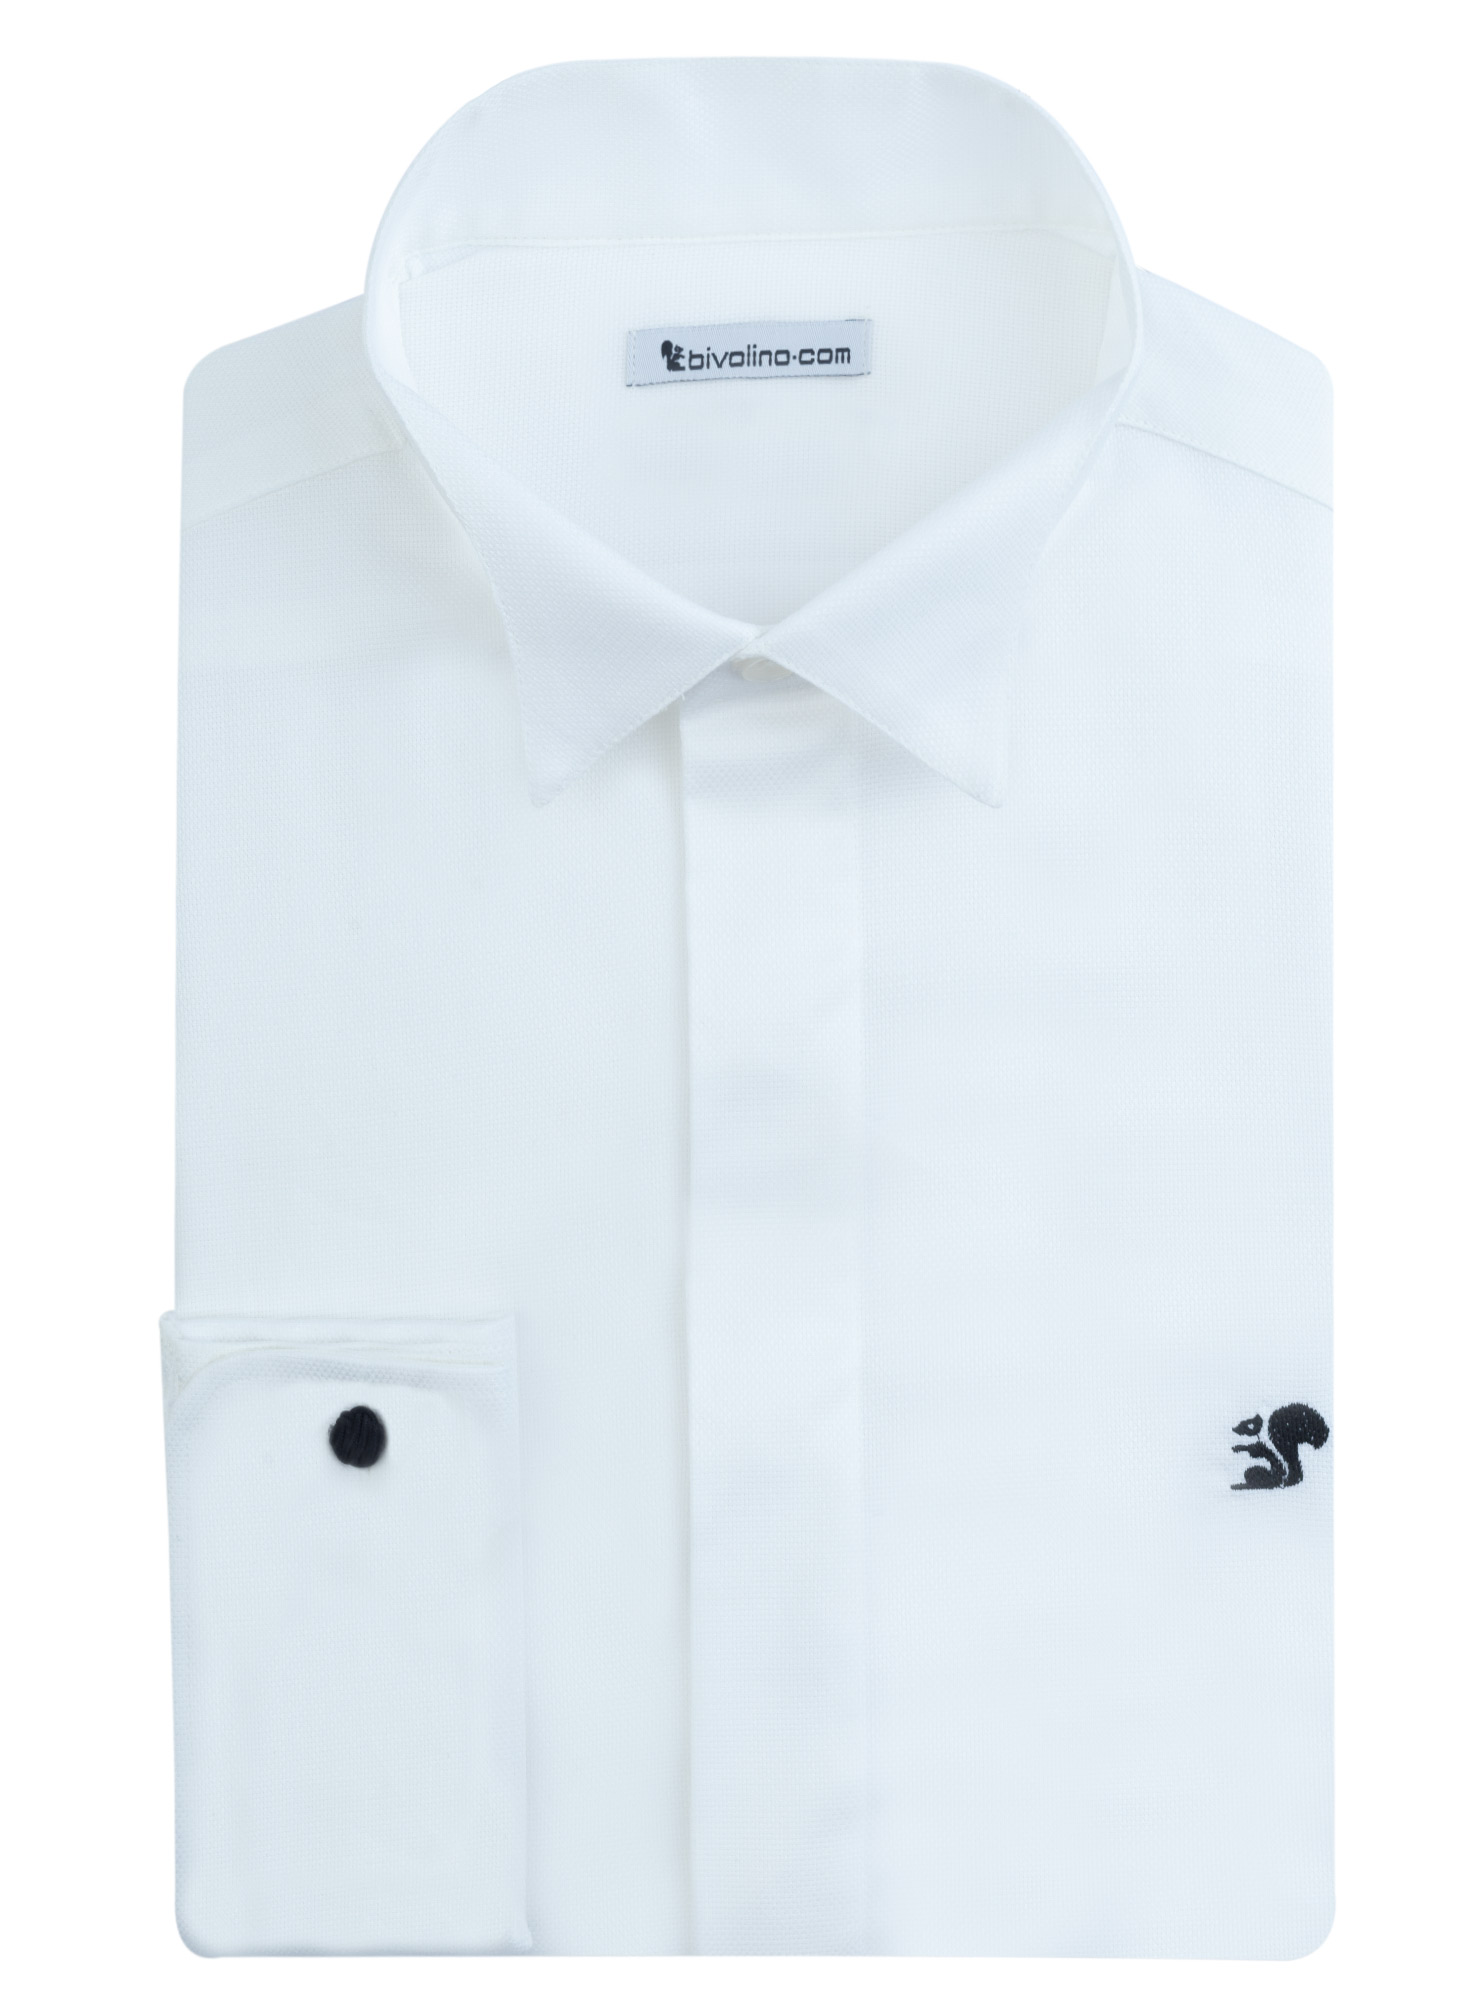 RAGUSA - chemise homme sur mesure Dobby coton blanc - VERCA 2